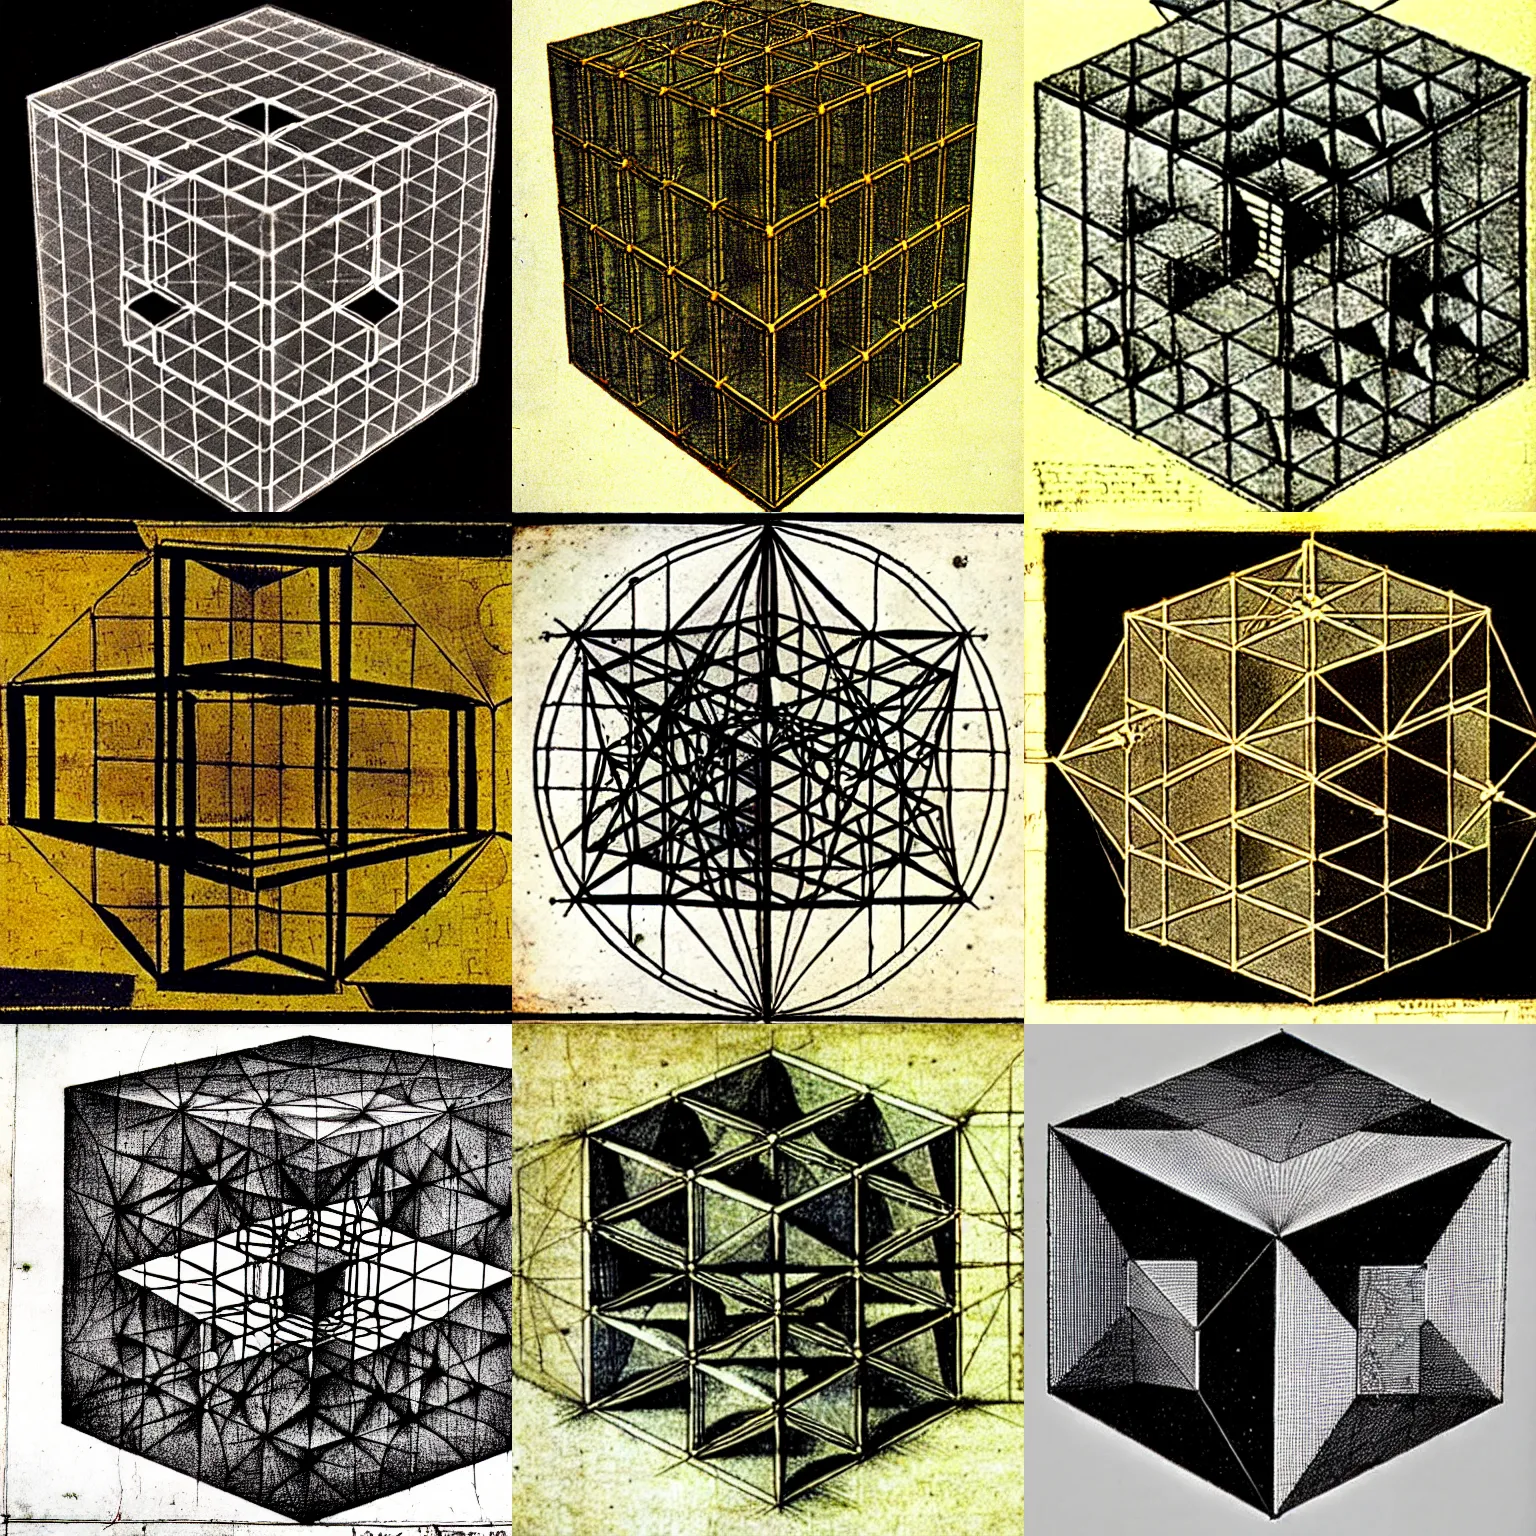 Prompt: a diagram of a 4 - dimensional hypercube by leonardo da vinci